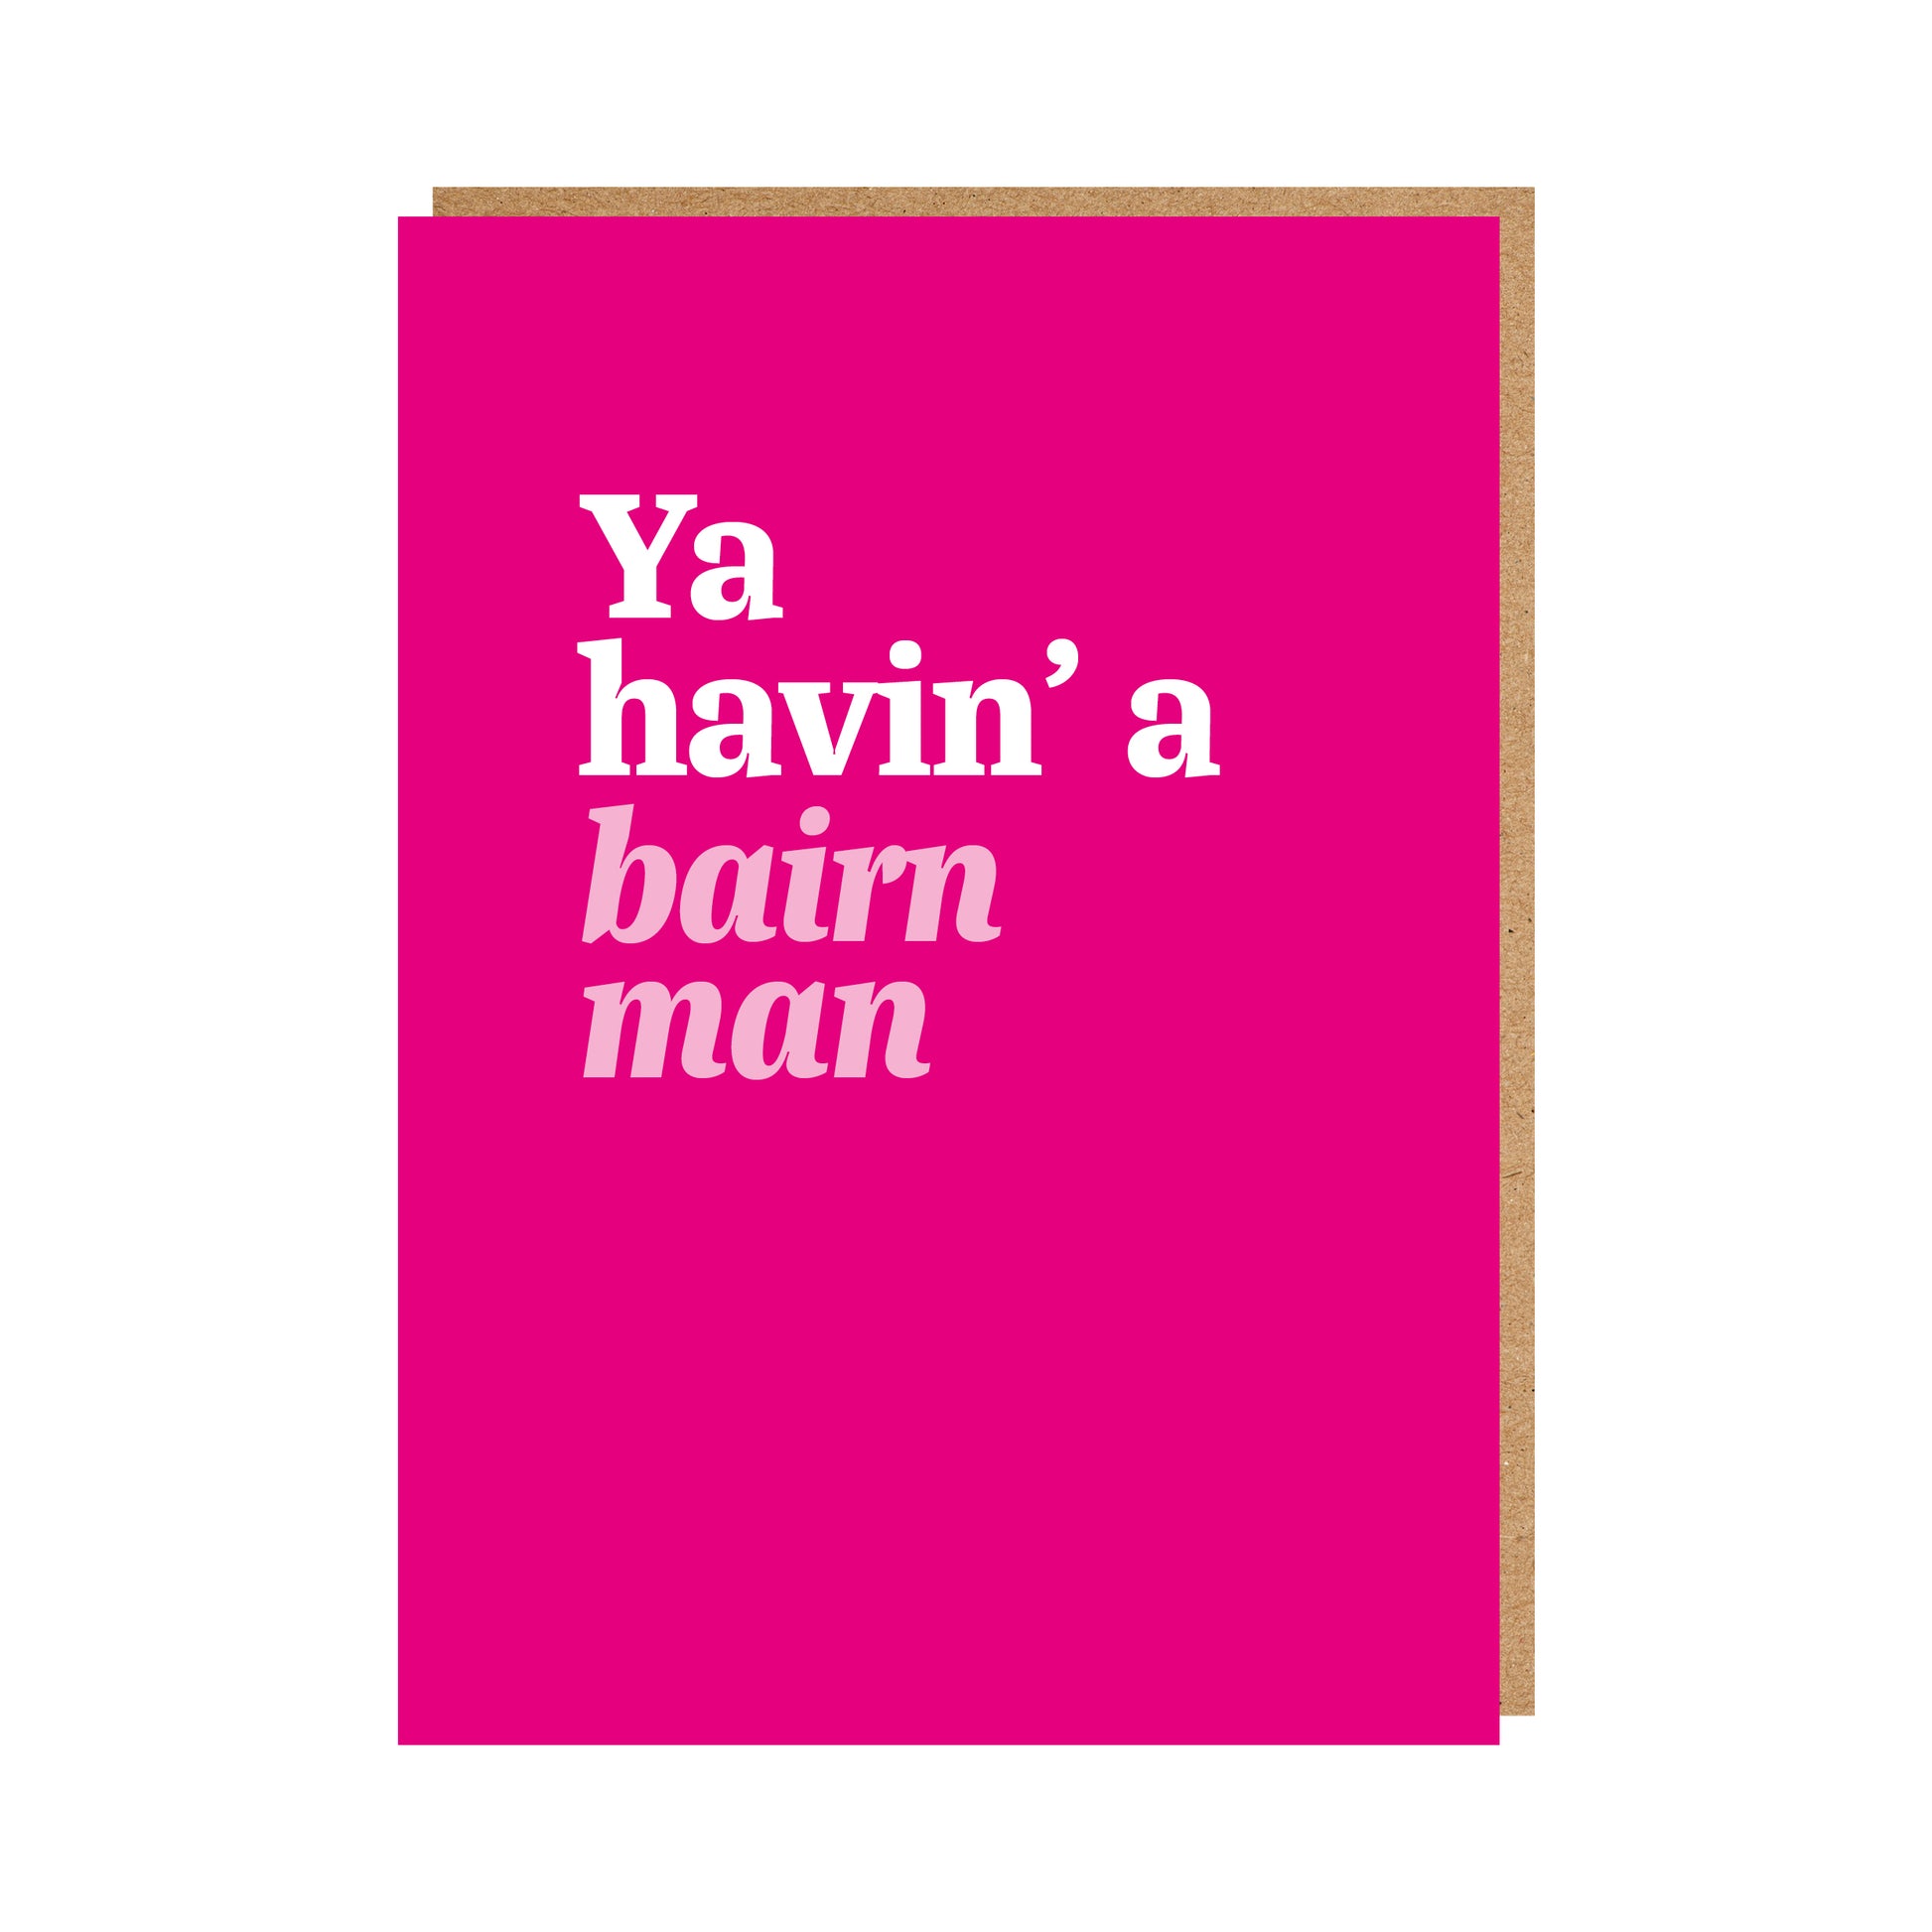 Geordie Pregnancy Card with text that reads "Ya havin' a bairn man"